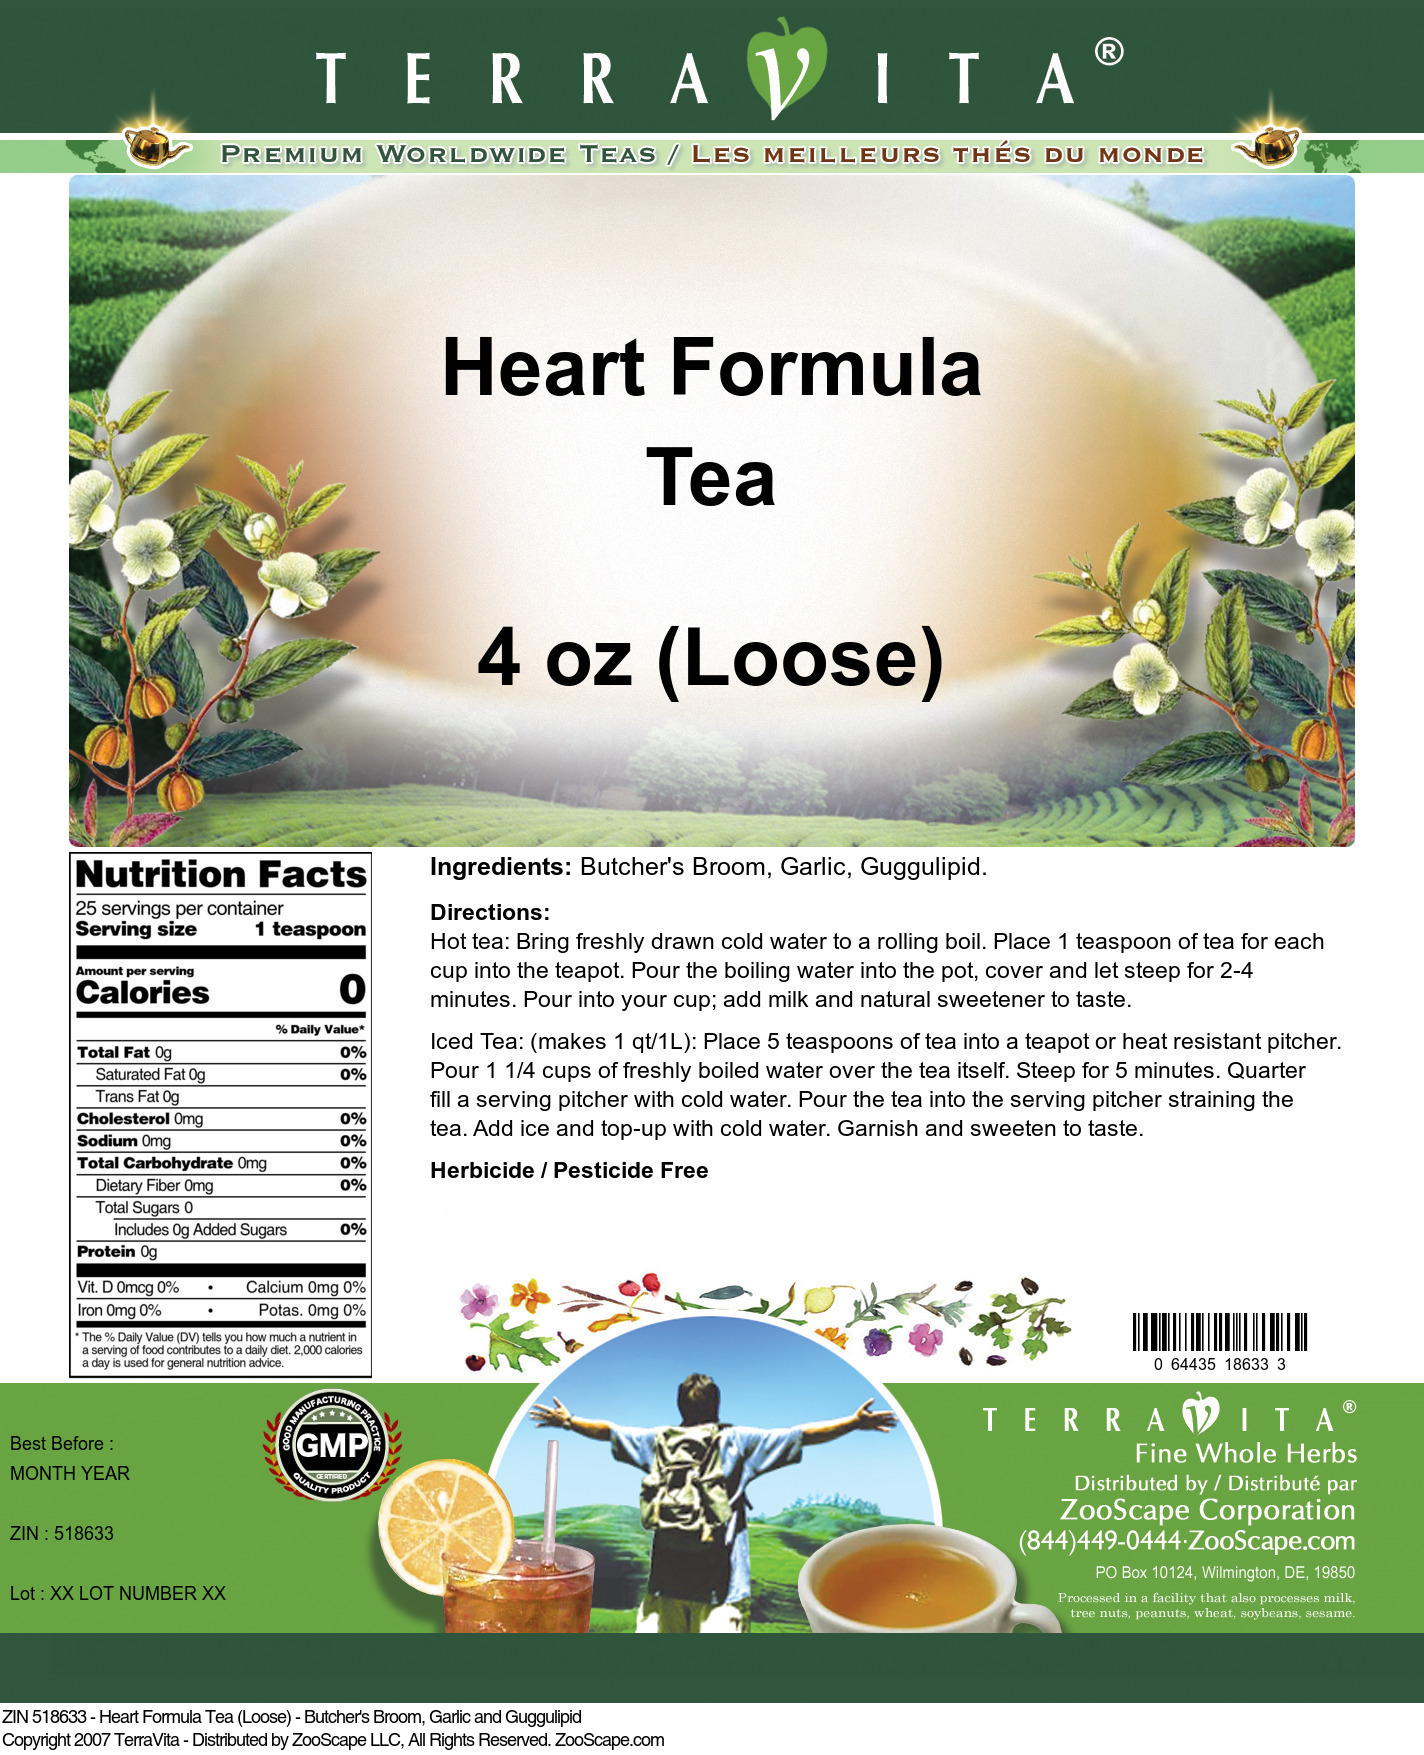 Heart Formula Tea (Loose) - Butcher's Broom, Garlic and Guggulipid - Label